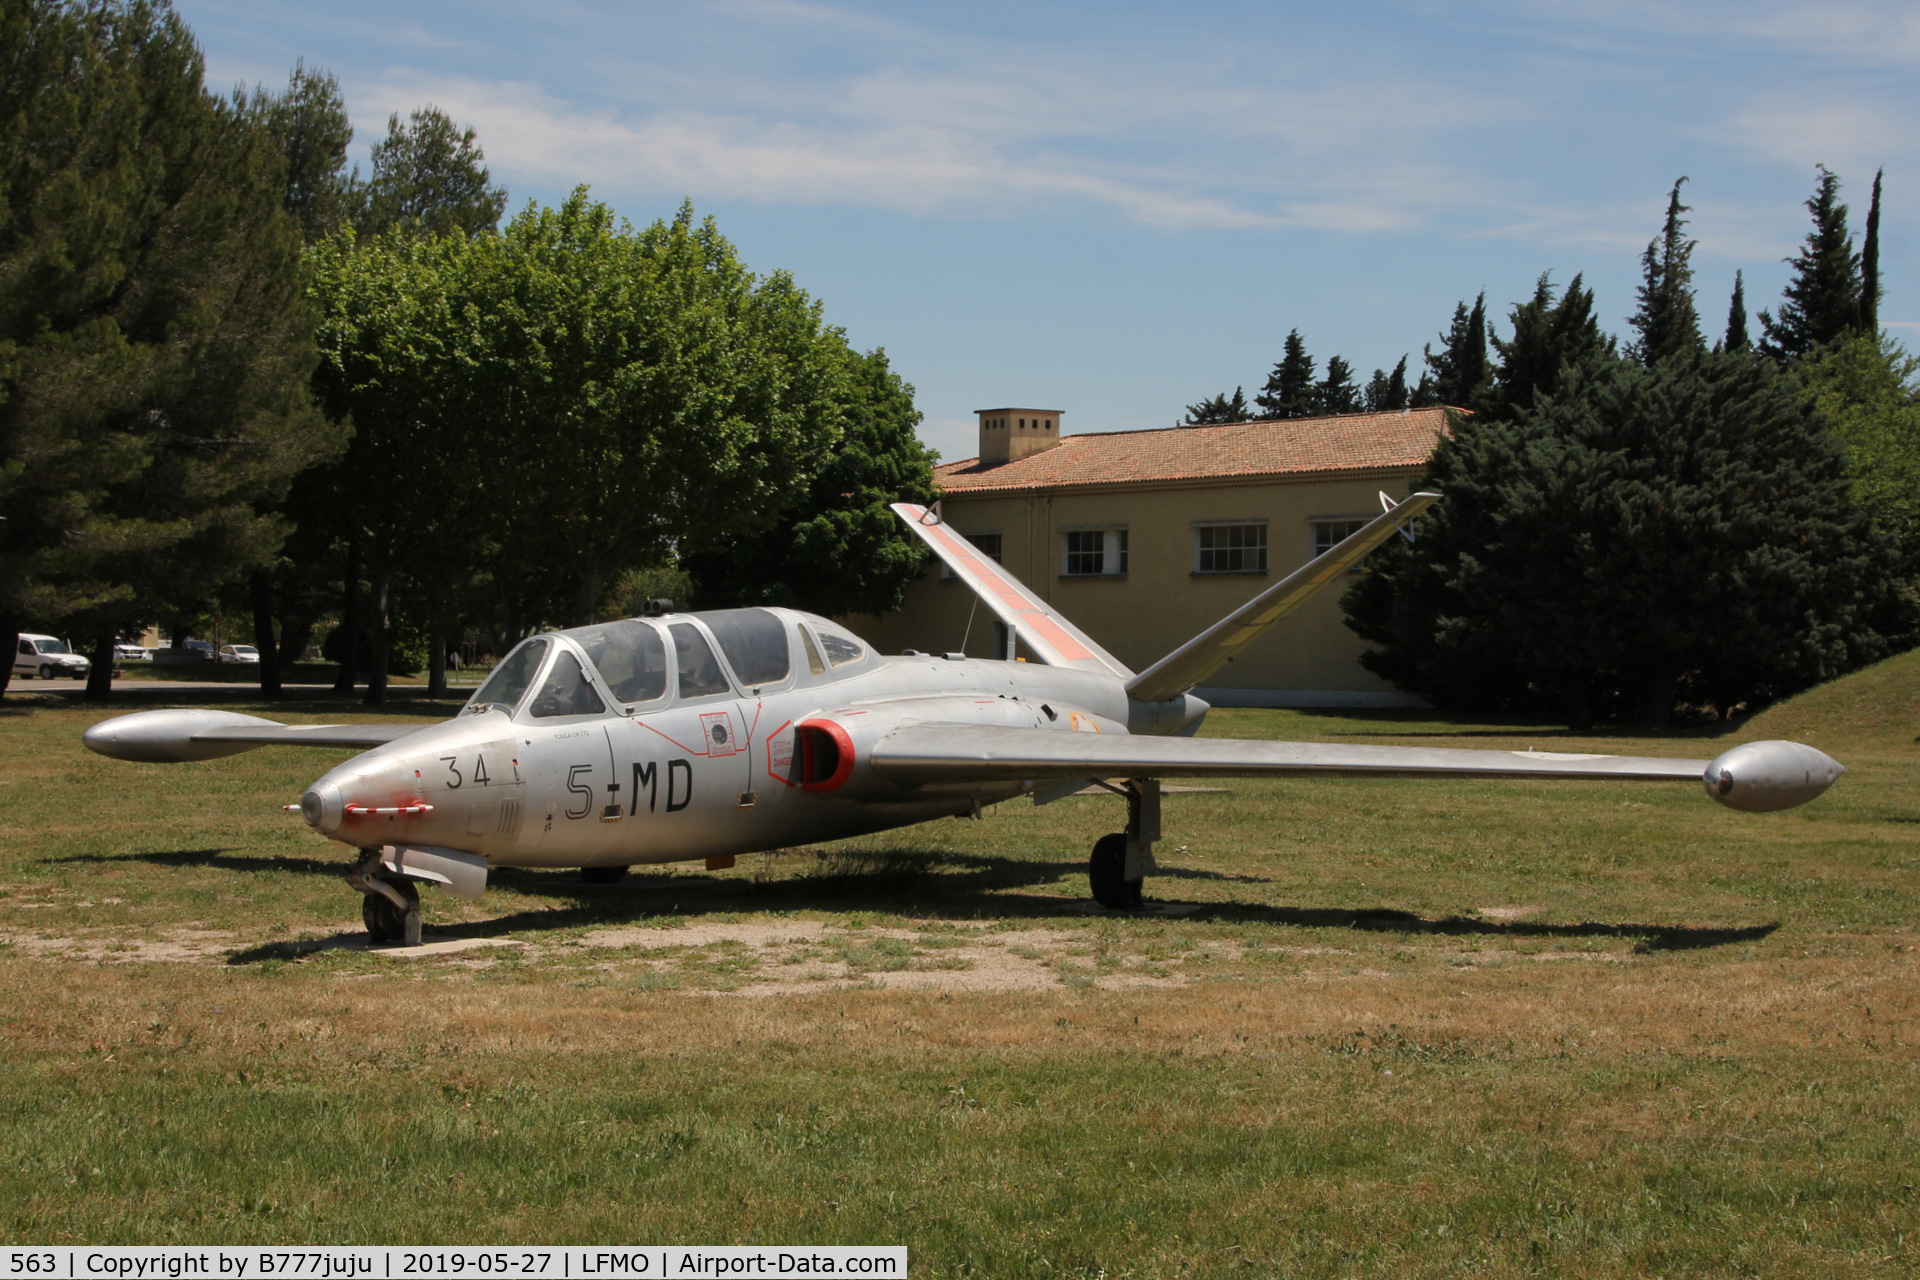 563, Fouga CM-170 Magister C/N 563, at Orange